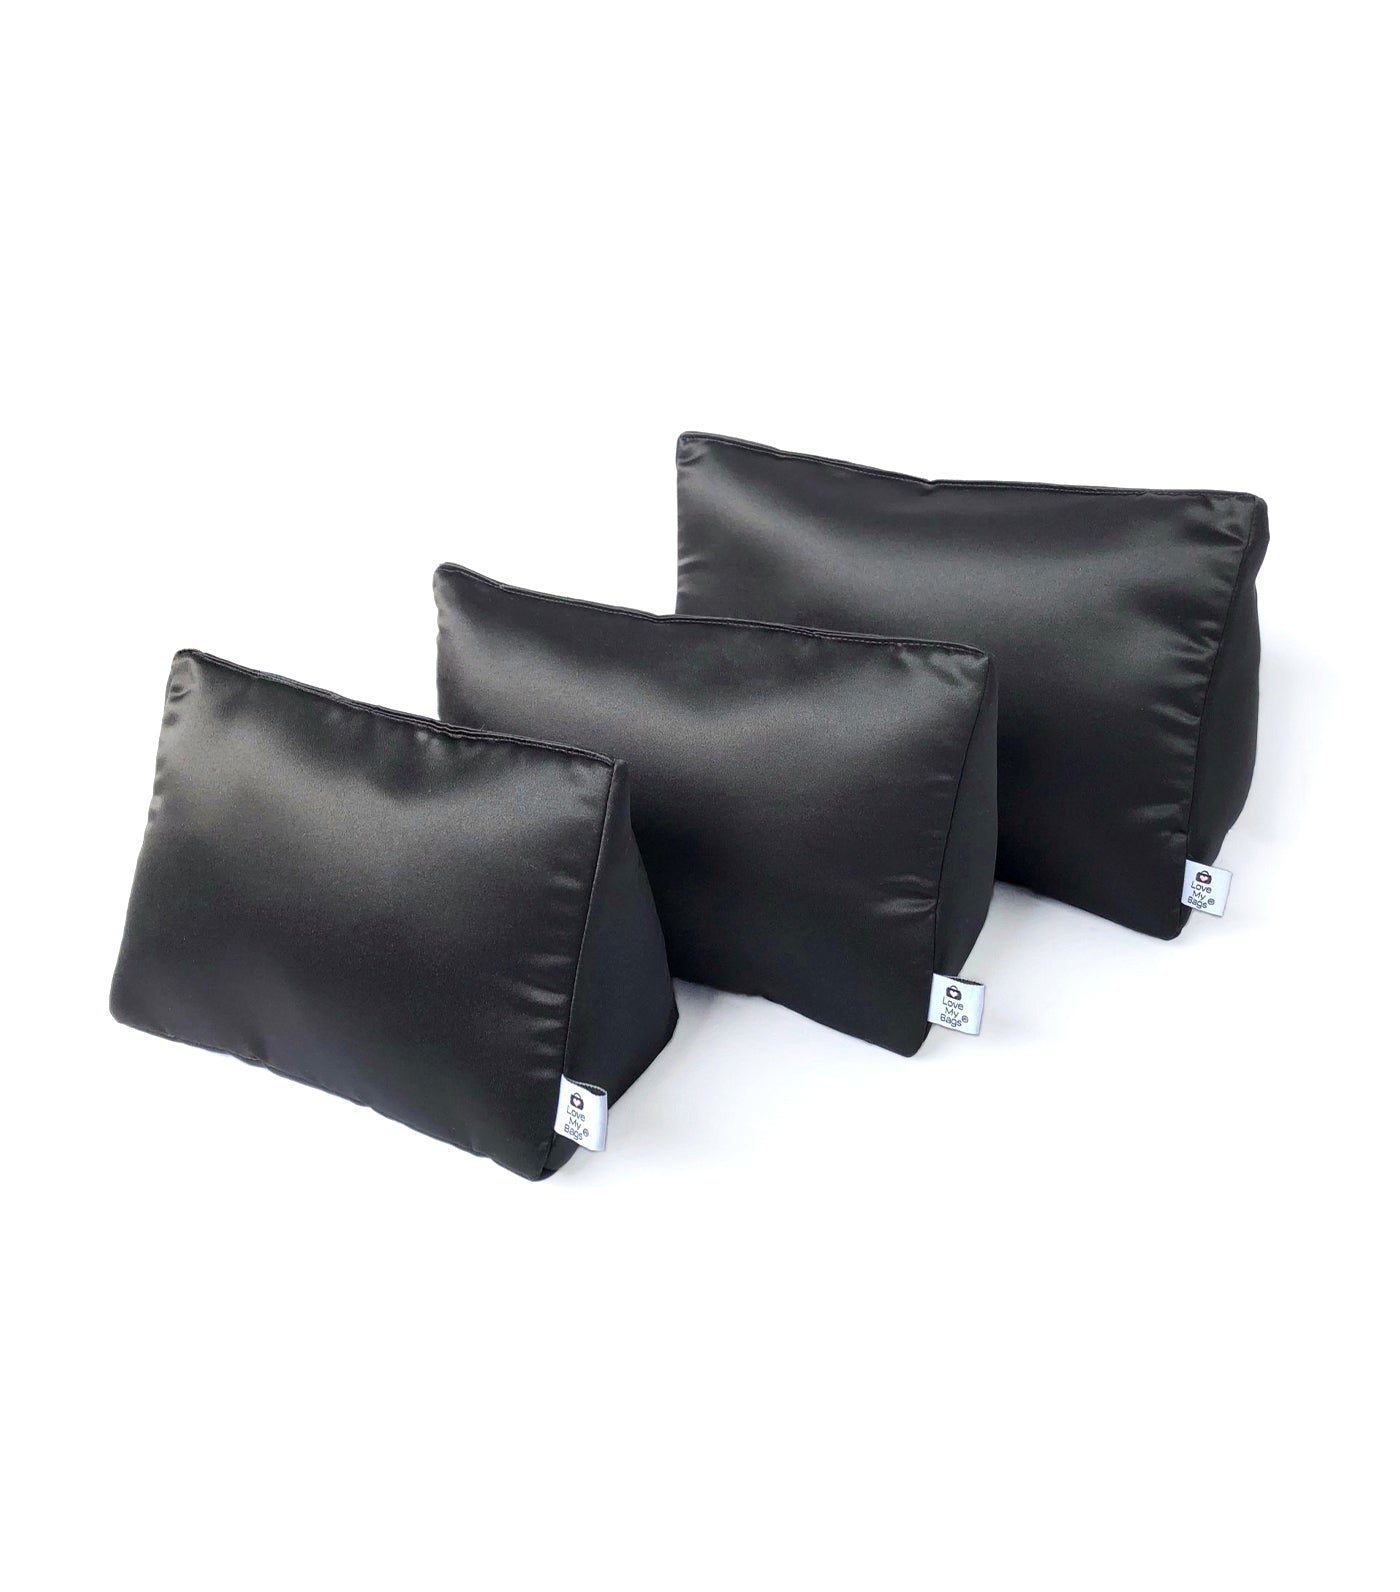 Bag Stuffer HB 25 to 35 Black